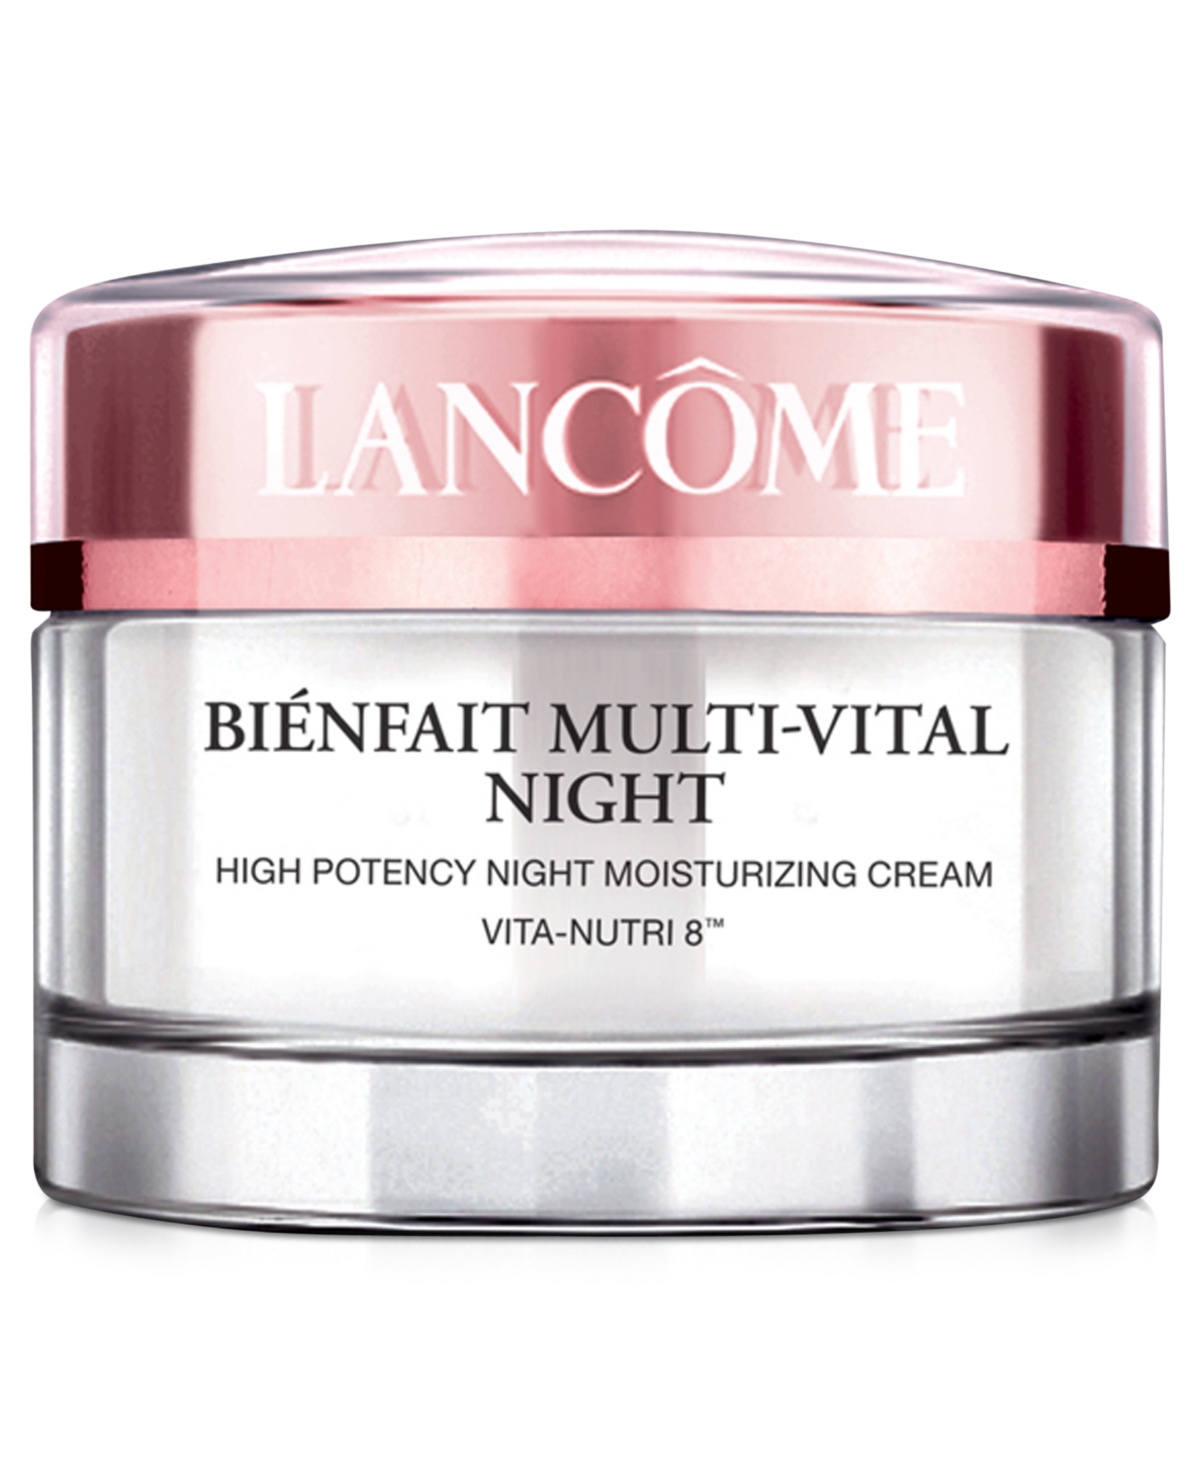 EAN 3605970002534 product image for Lancome Bienfait Multi-Vital Night Cream Moisturizer, 1.7 oz | upcitemdb.com